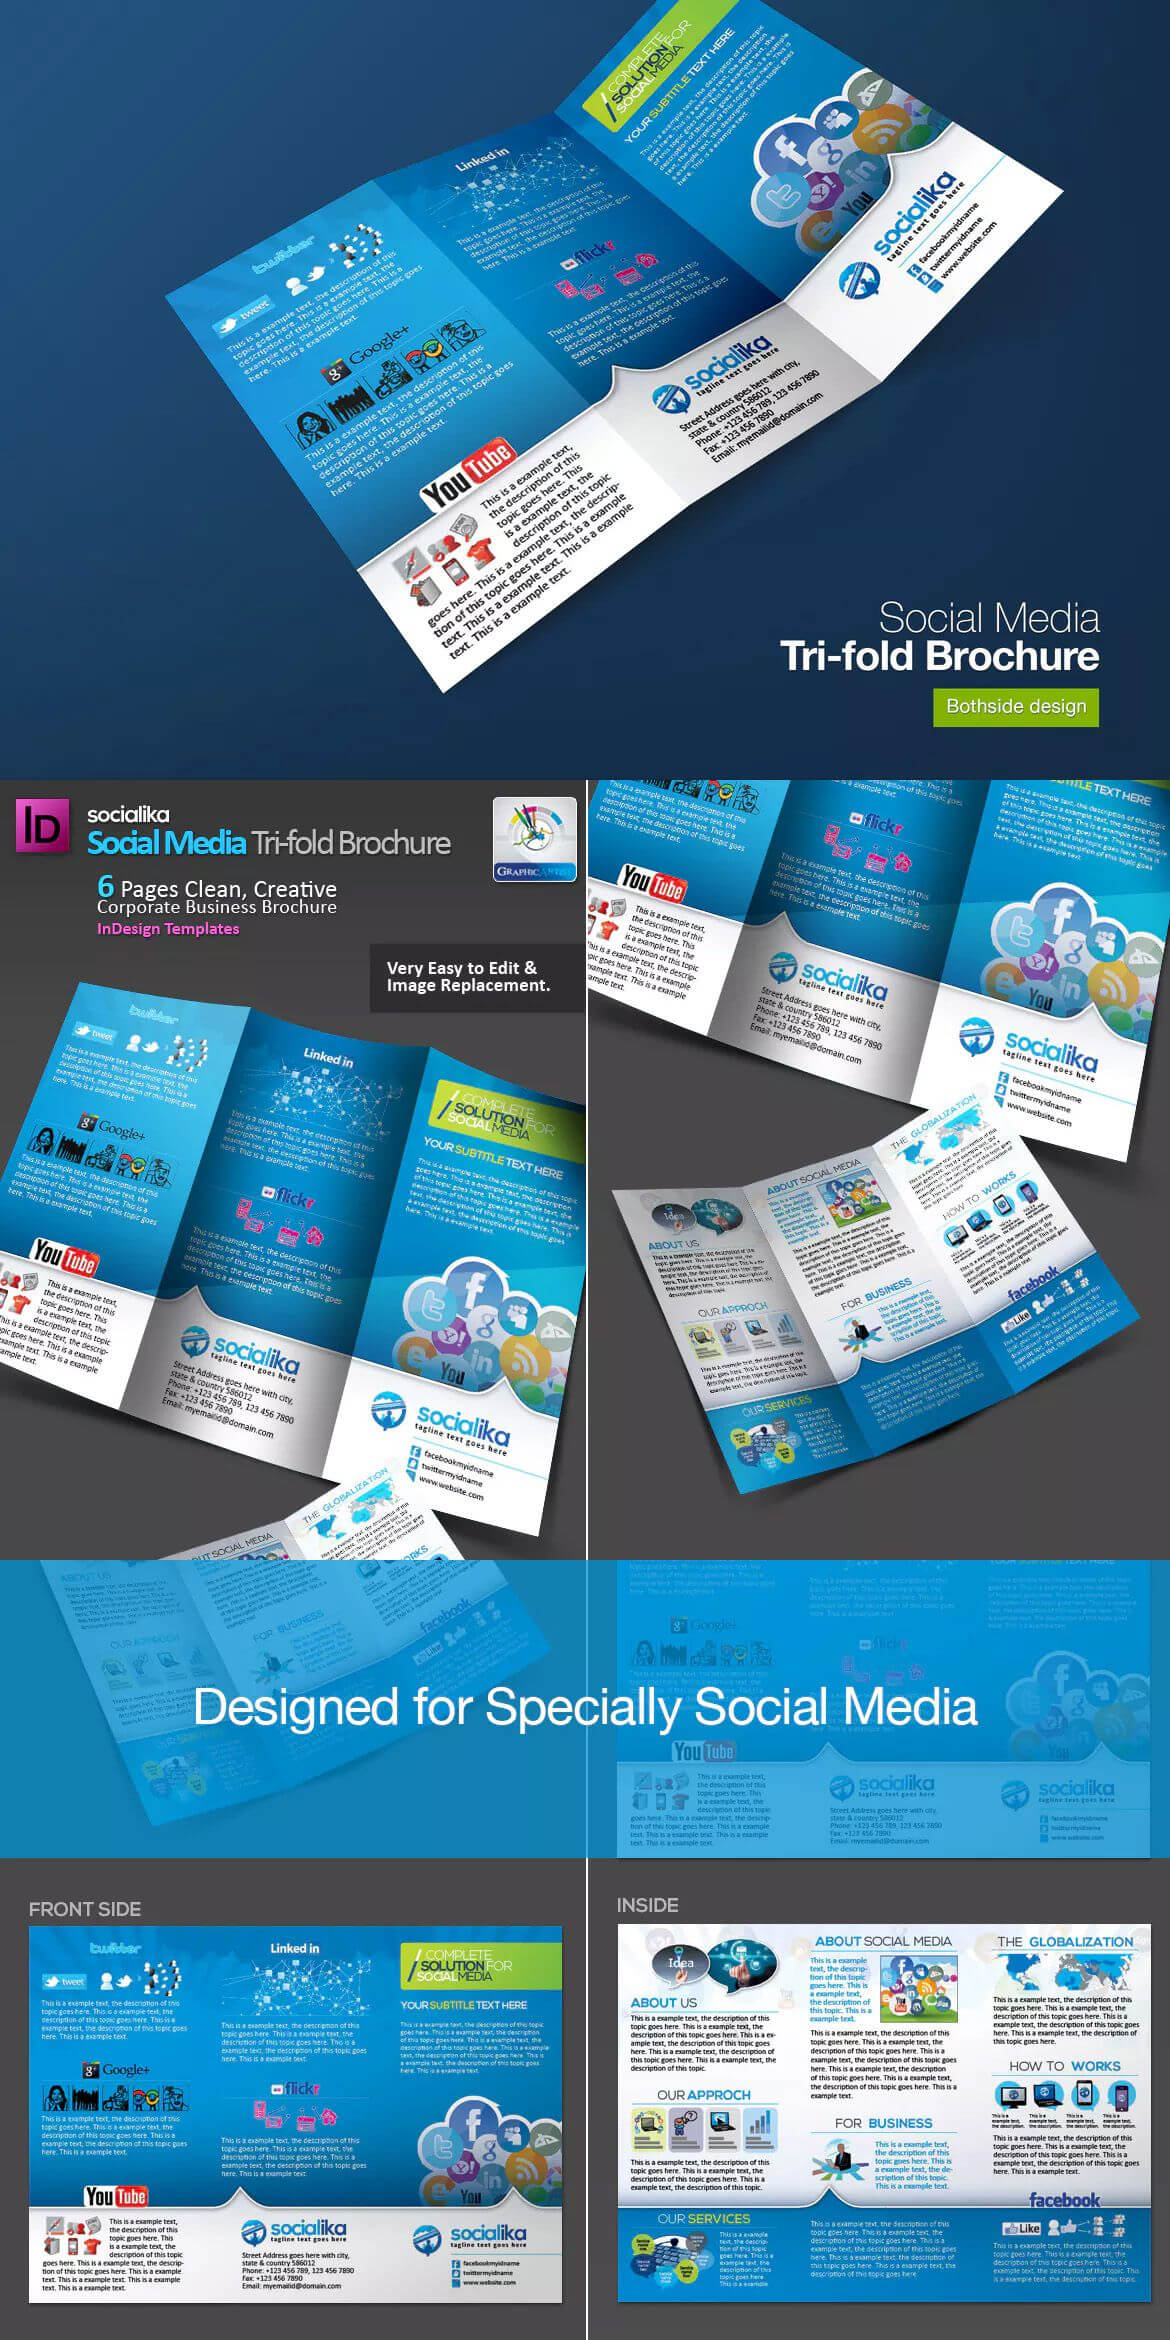 Social Media Tri Fold Brochure Template Indd | Brochure Throughout Social Media Brochure Template